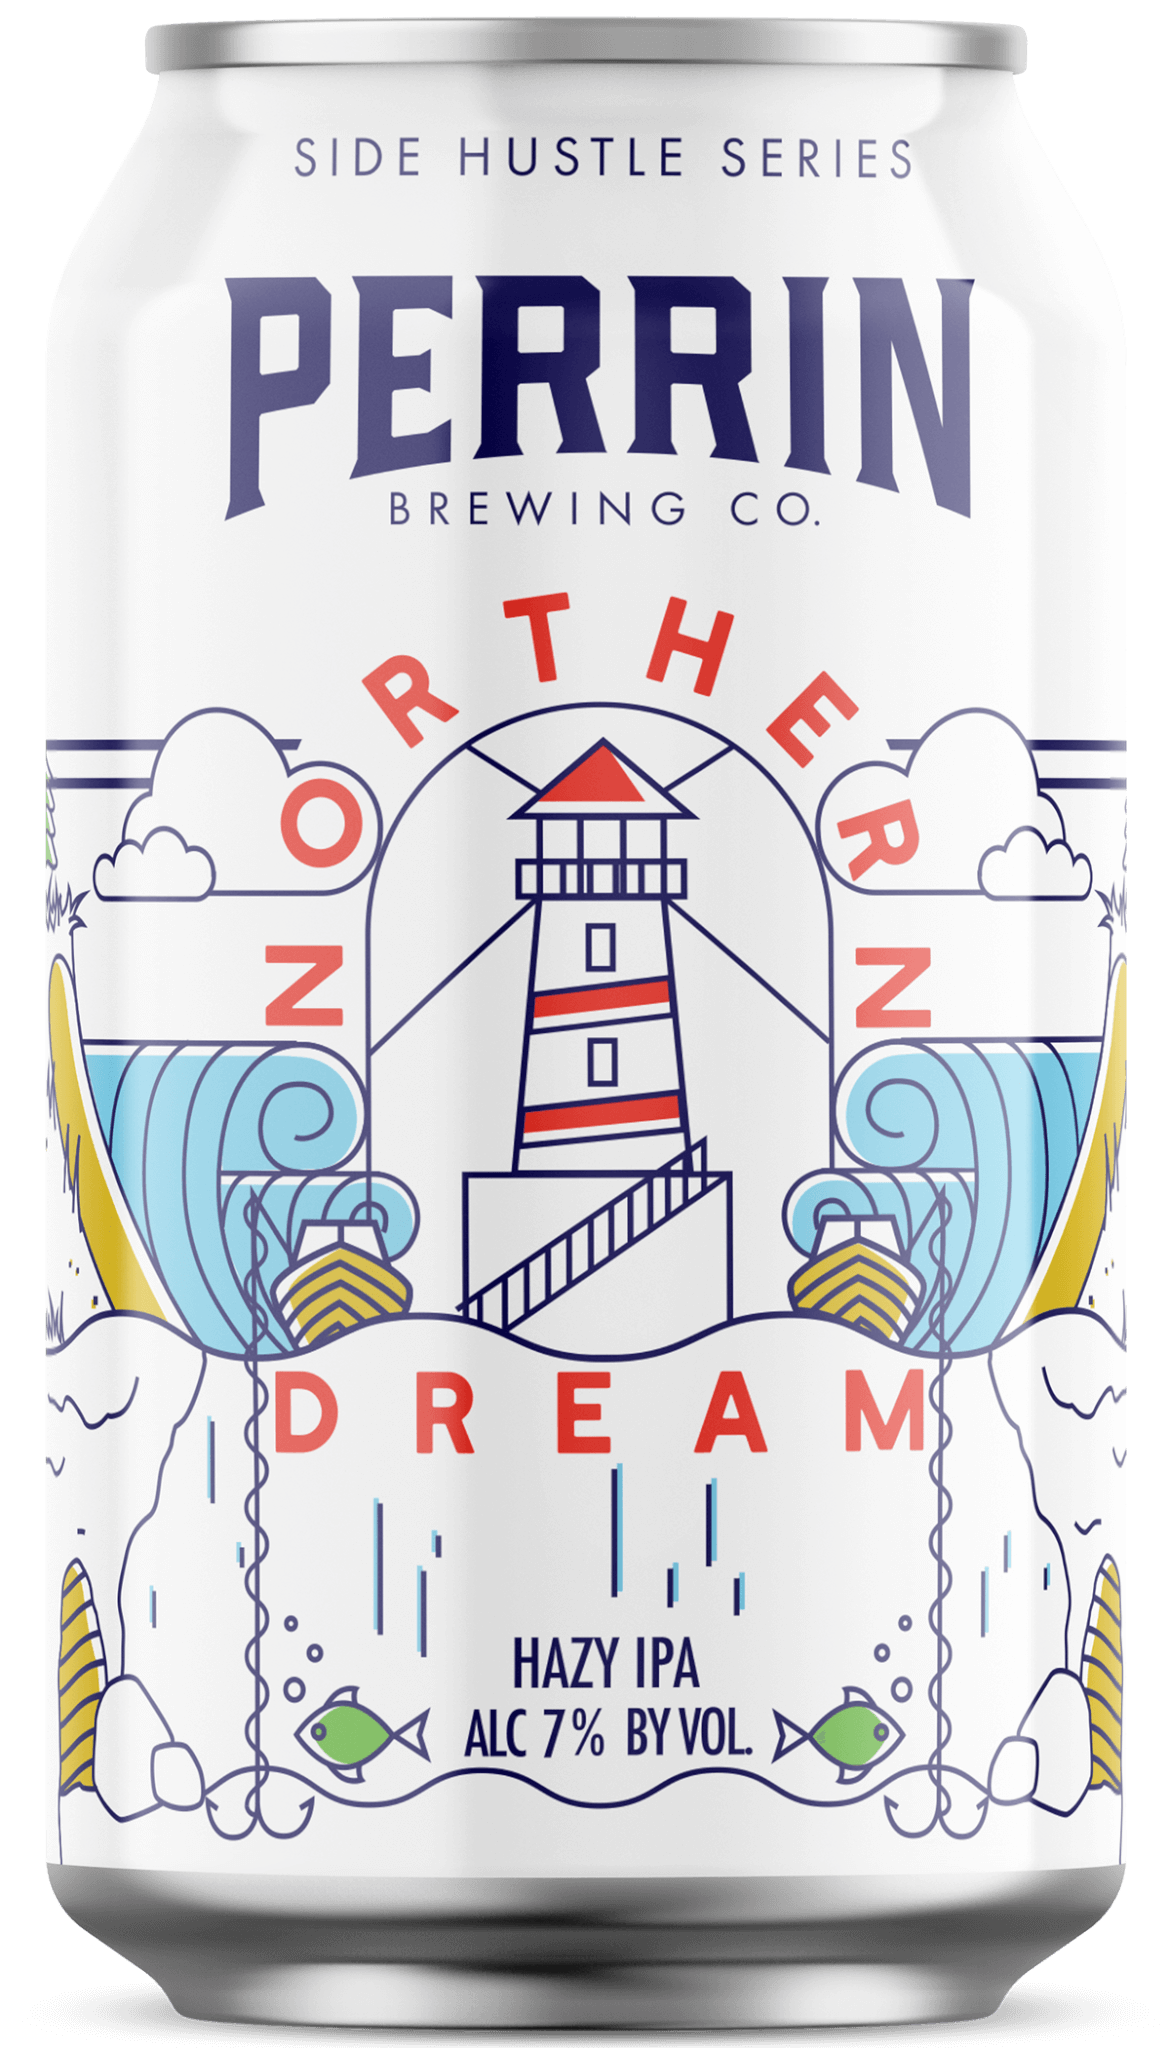 Northern Dream IPA